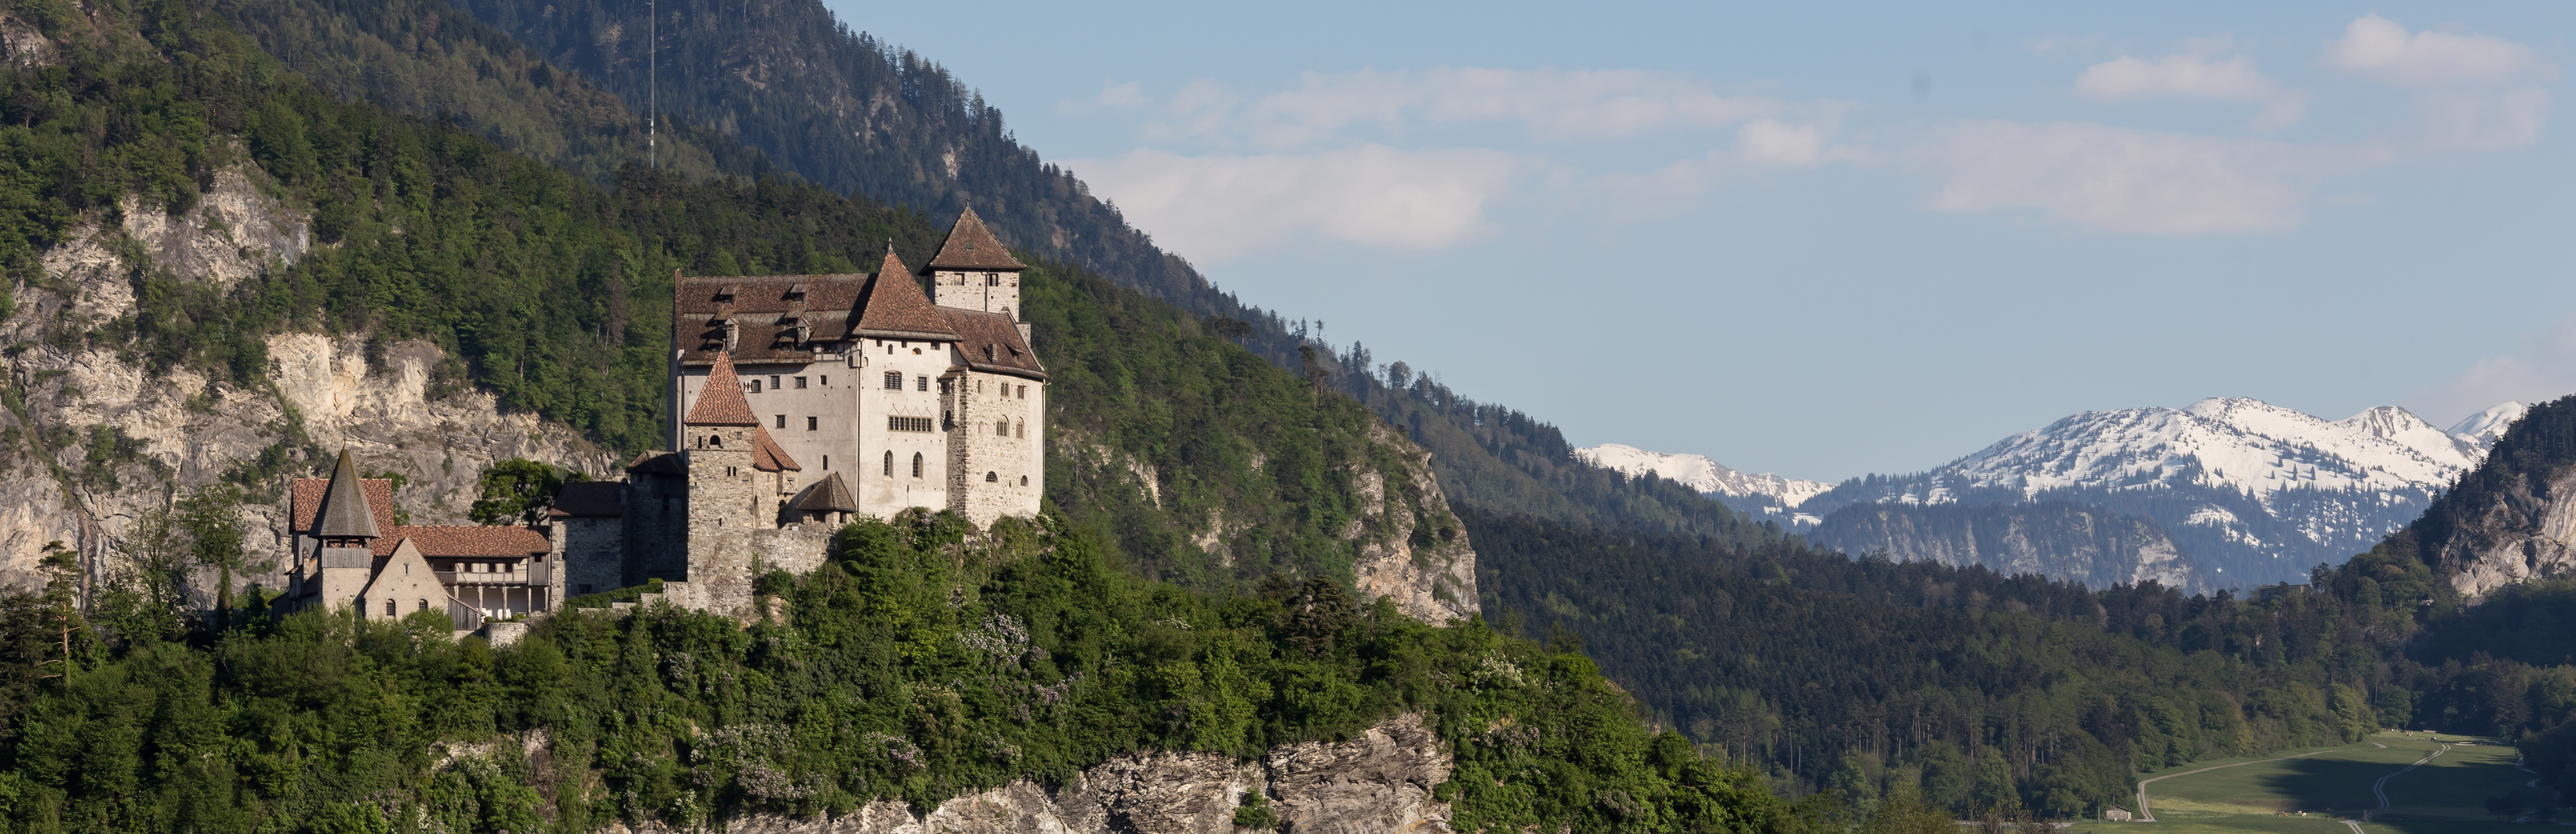 Liechtenstein chiropractic continuing professional development requirements